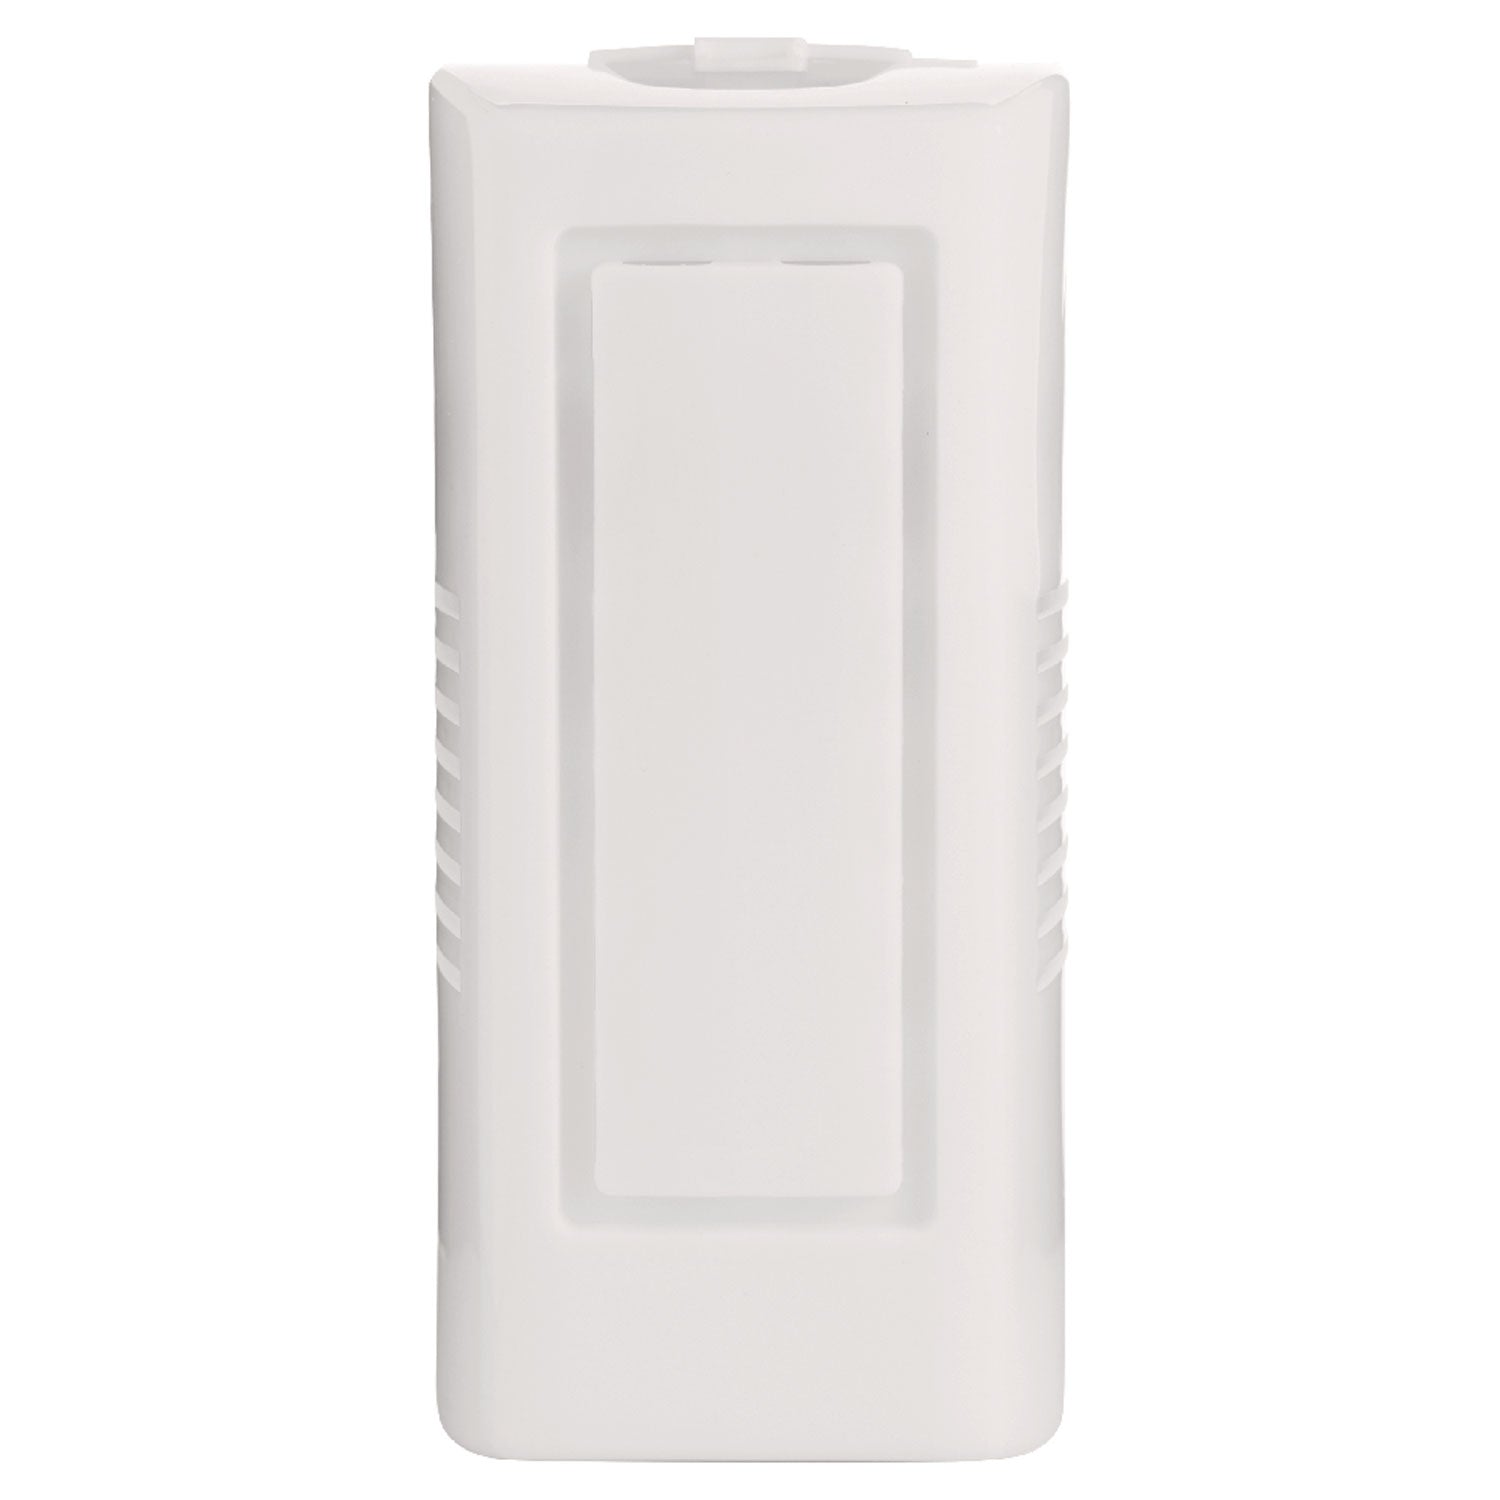 Gel Air Freshener Dispenser Cabinet, 4" x 3.5" x 8.75", White - 1